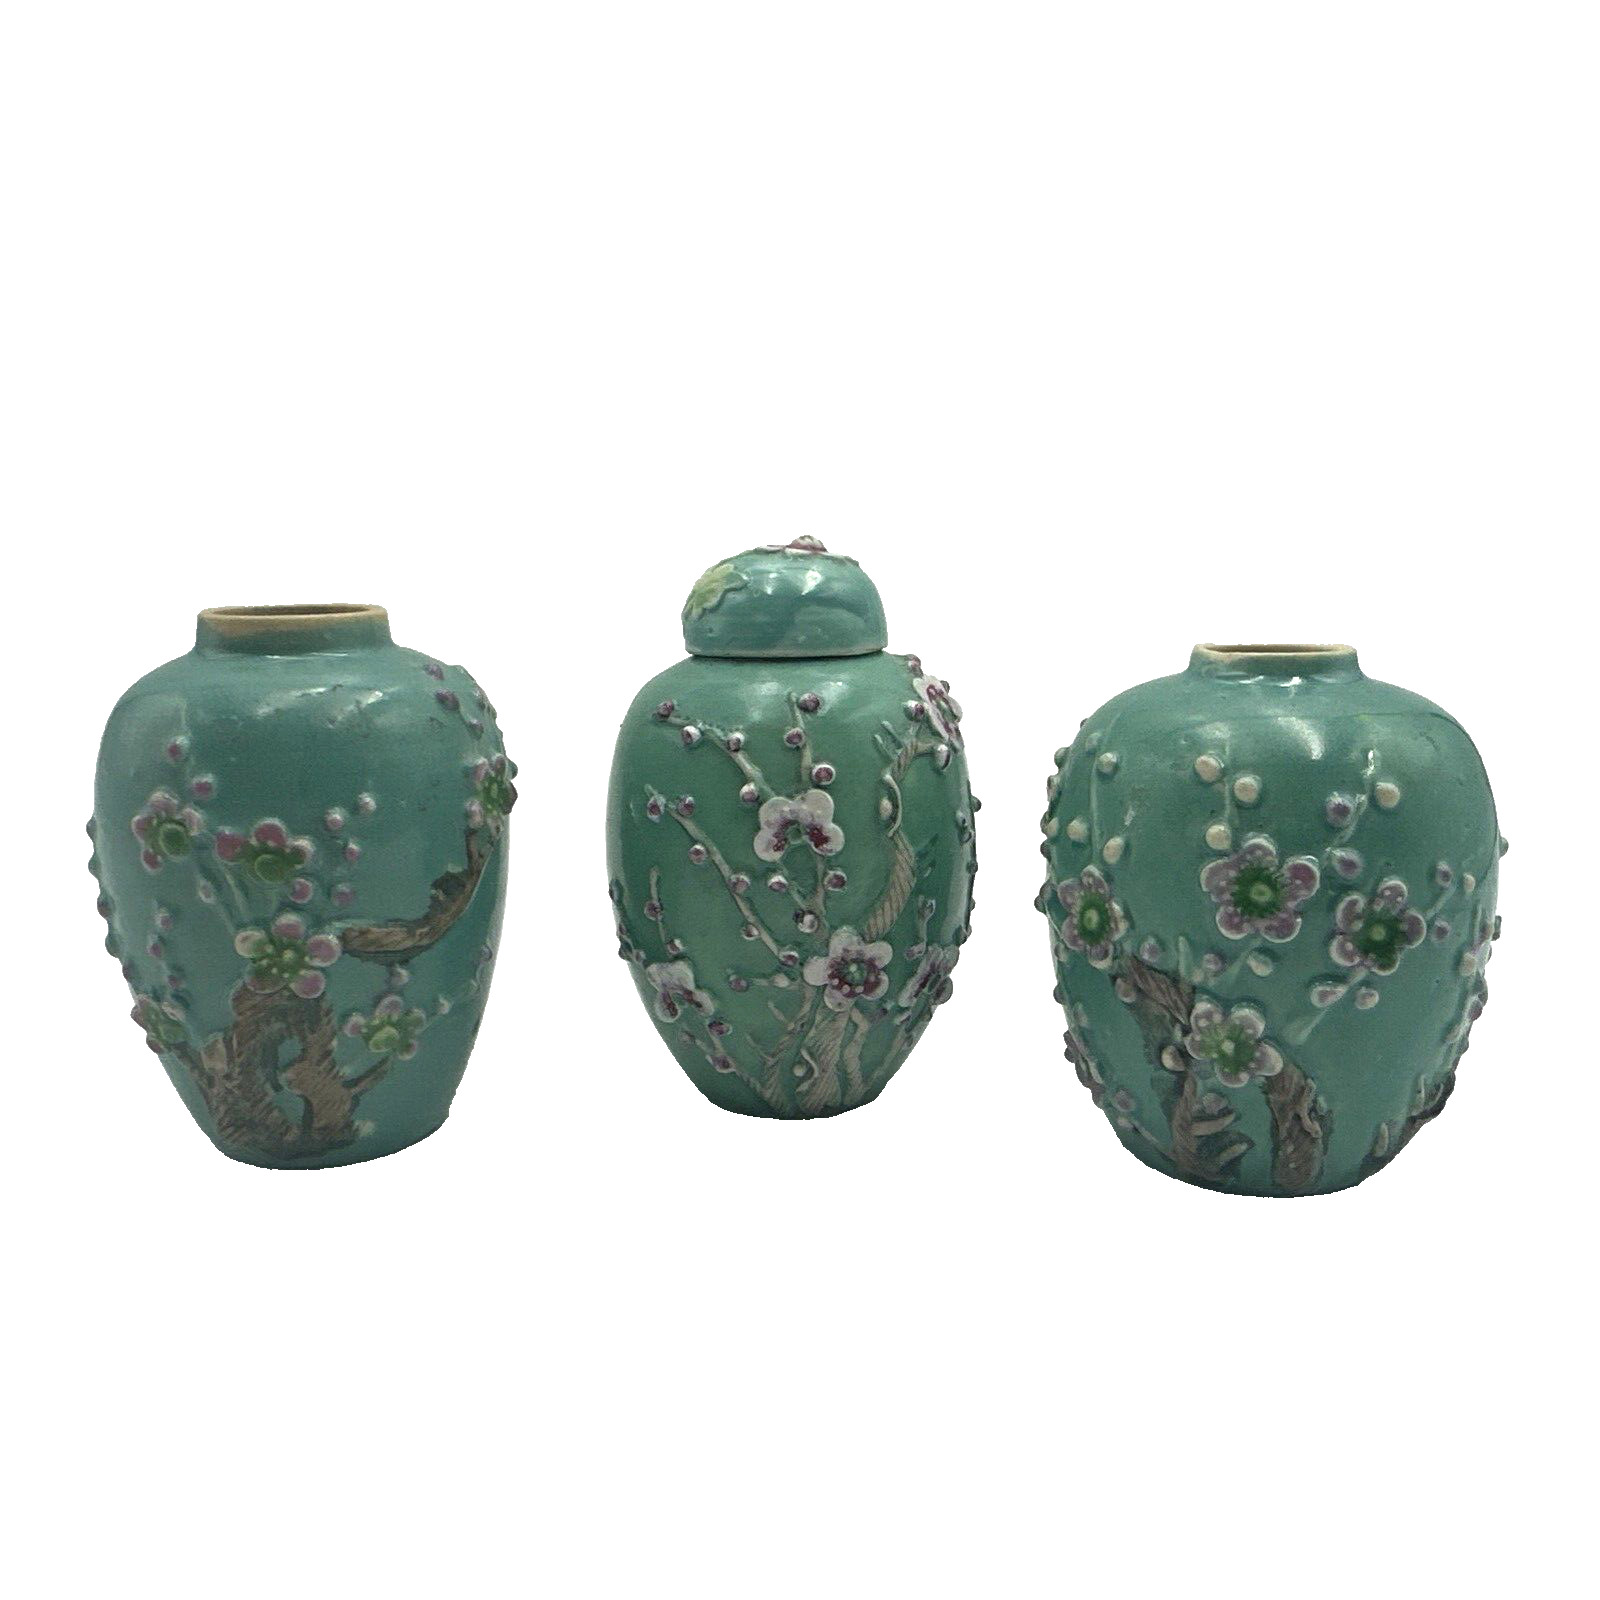 Miniature Chinese Ceramics 2 Vases 1 Ginger Jar Turquoise Flowers